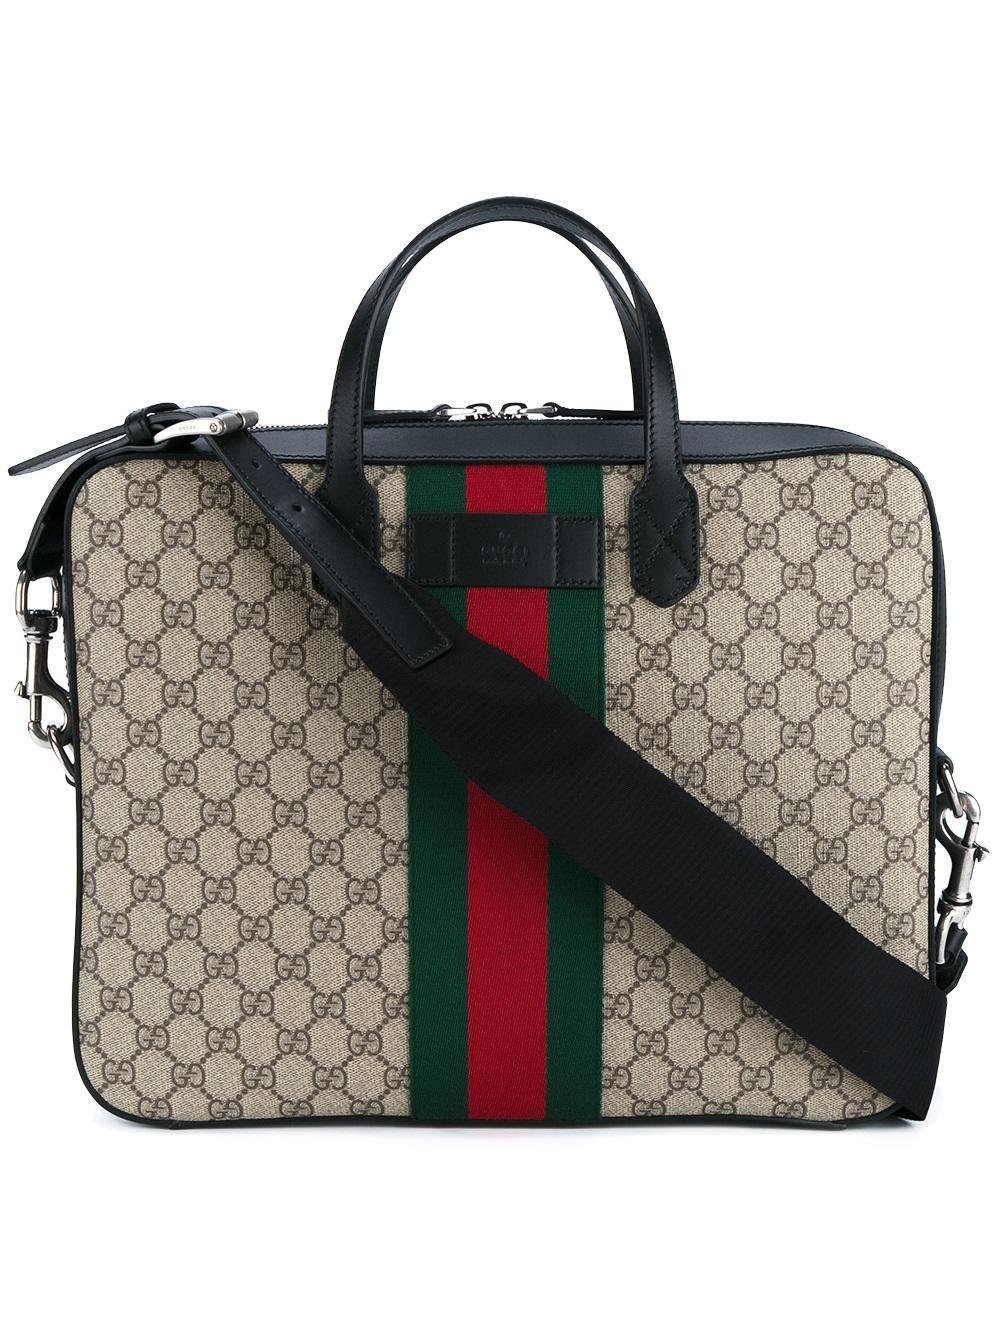 Gucci Canvas Web Gg Laptop Bag in Black for Men - Lyst